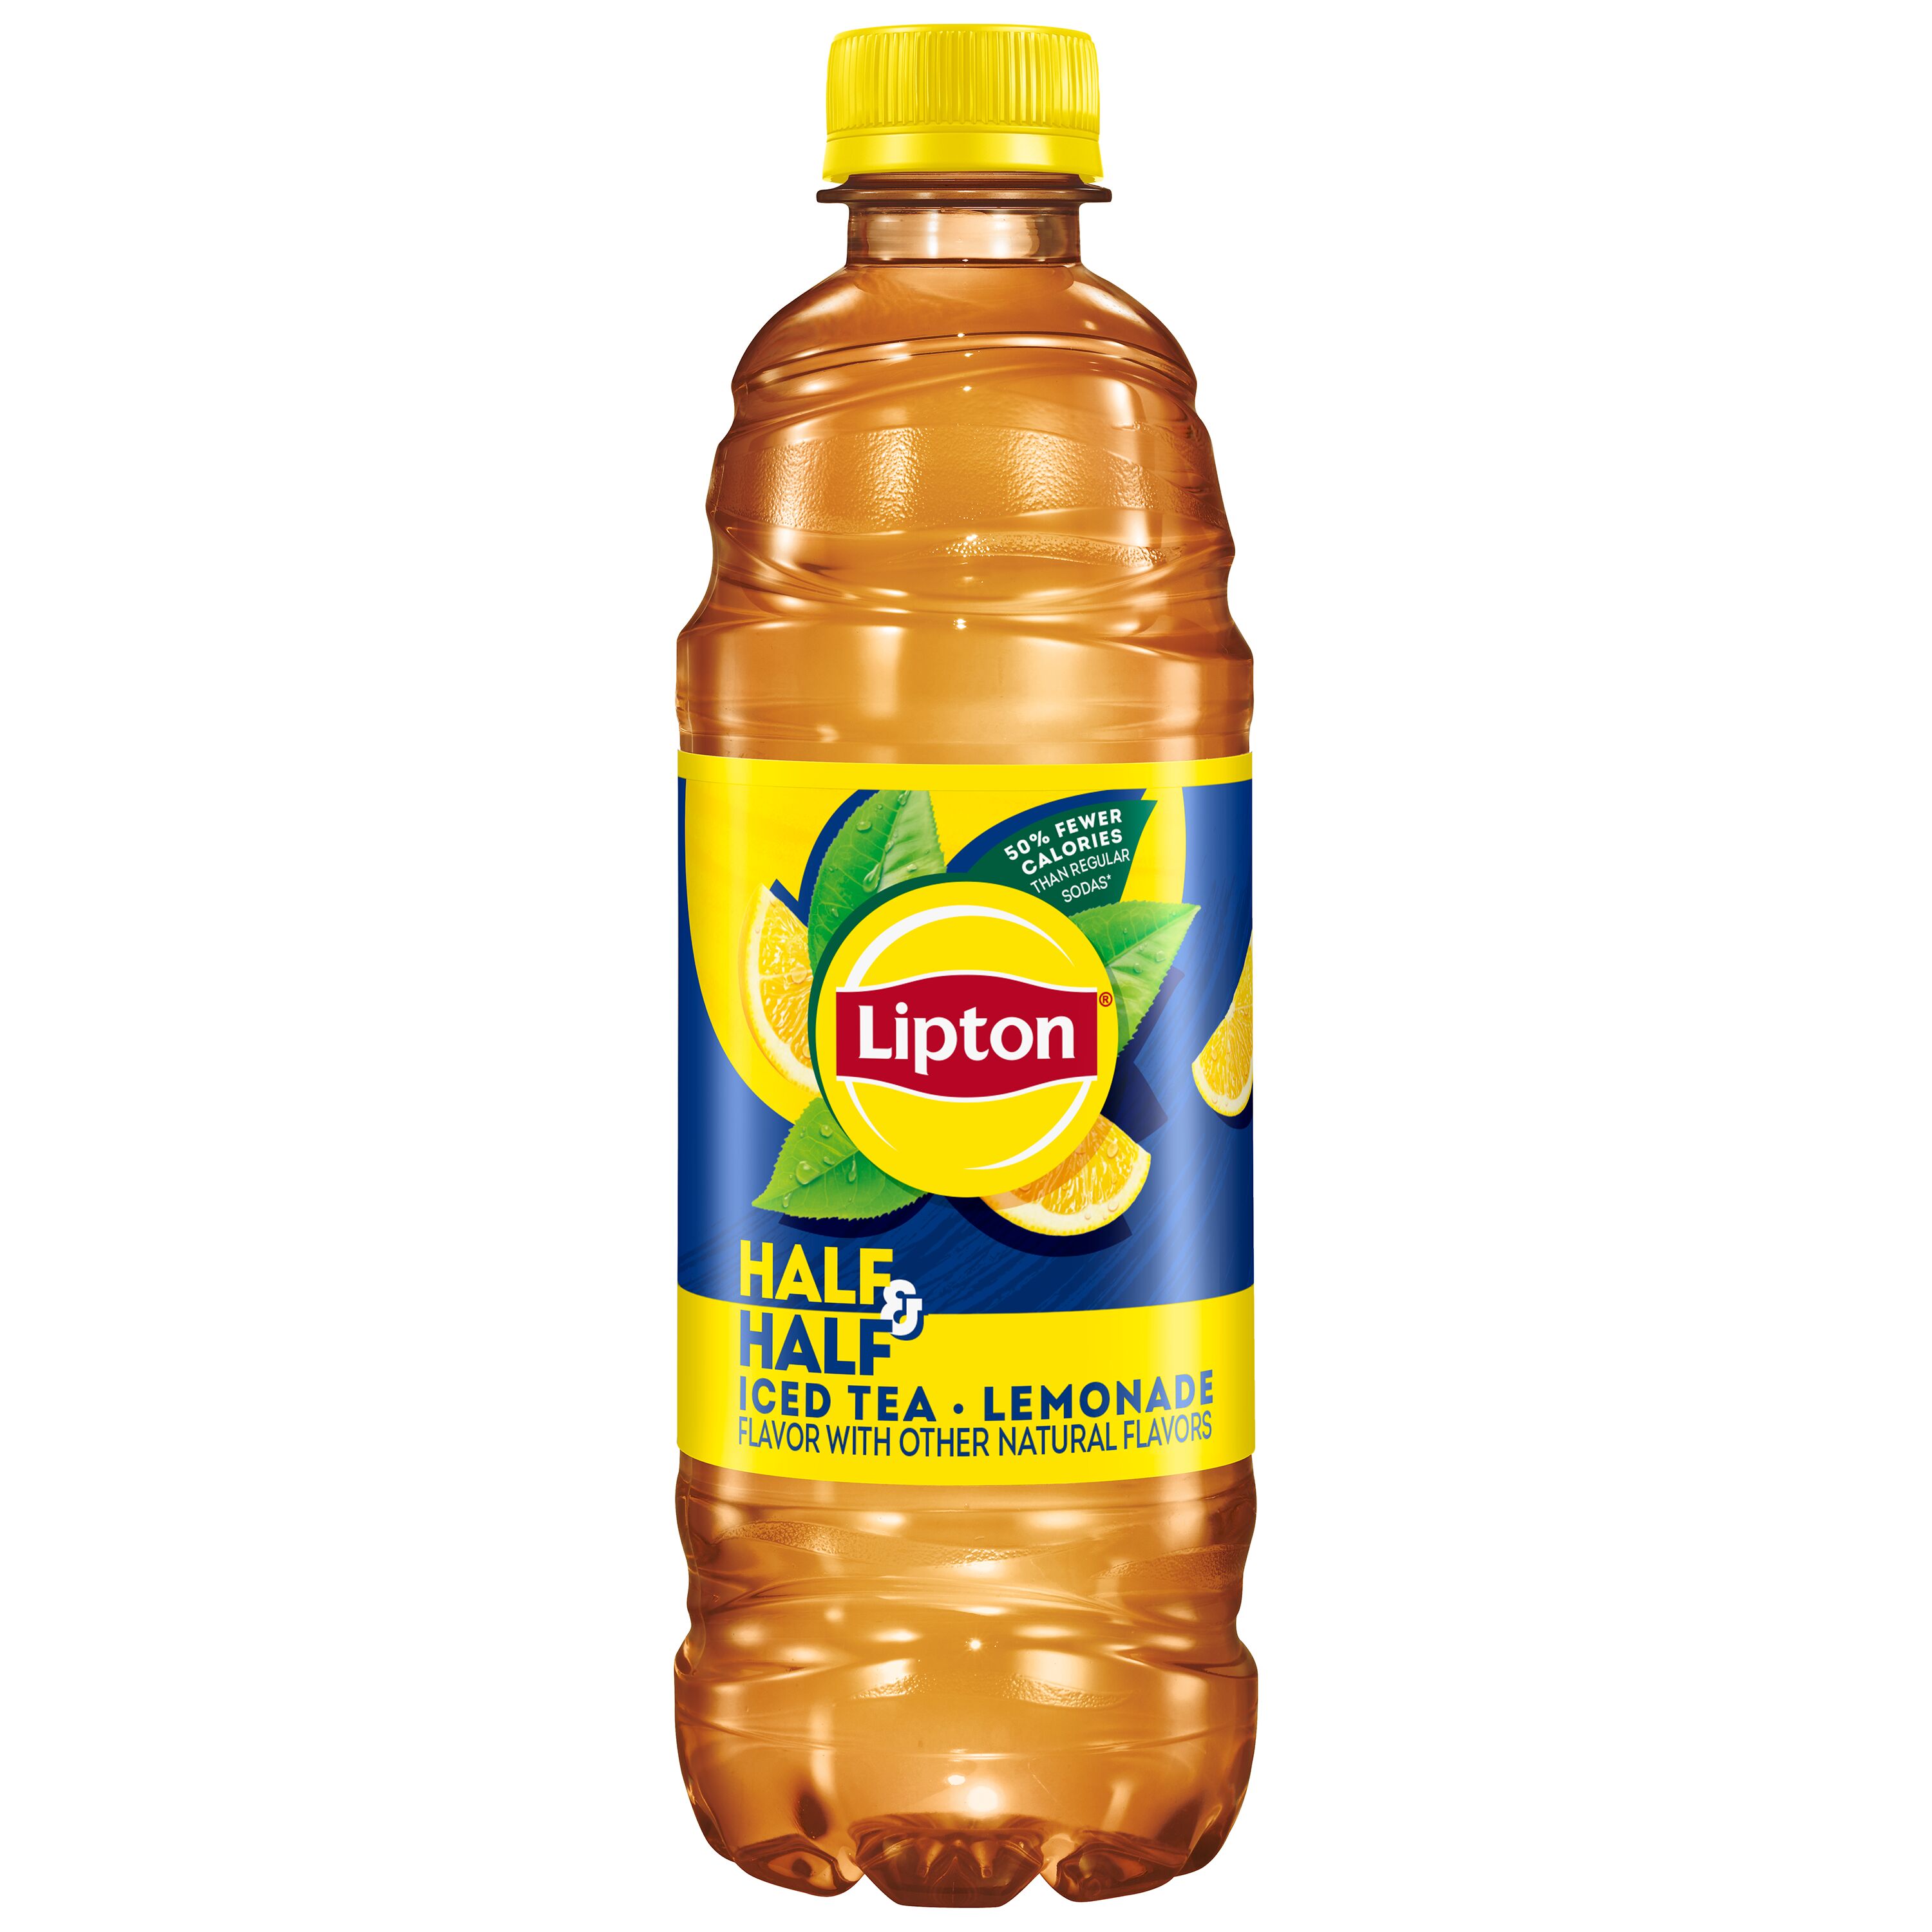 Lipton Half & Half Lemonade Iced Tea, 16.9 fl oz, 12 Pack Bottles - image 3 of 6